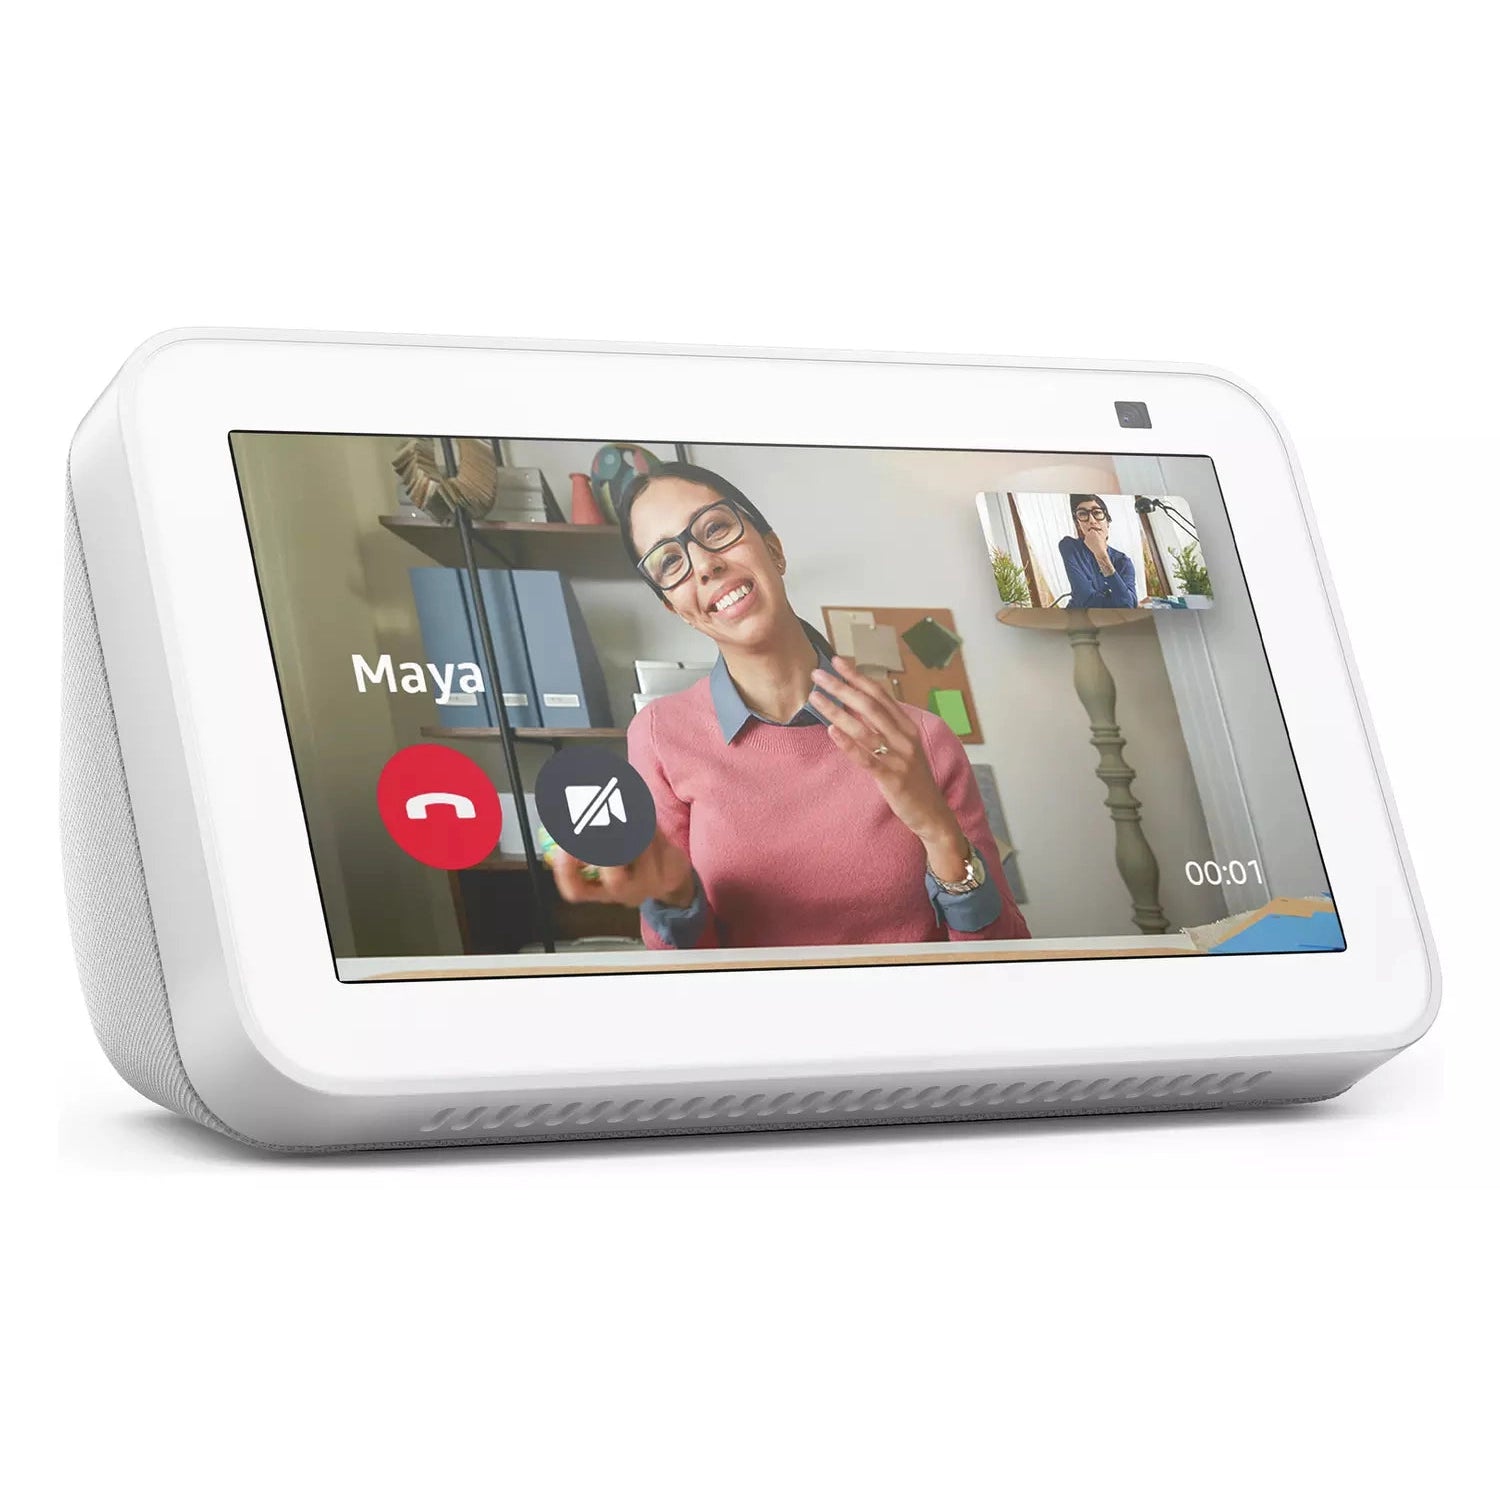 Amazon Echo Show 5 (2nd Gen) Smart Display With Alexa - White - Refurbished Pristine